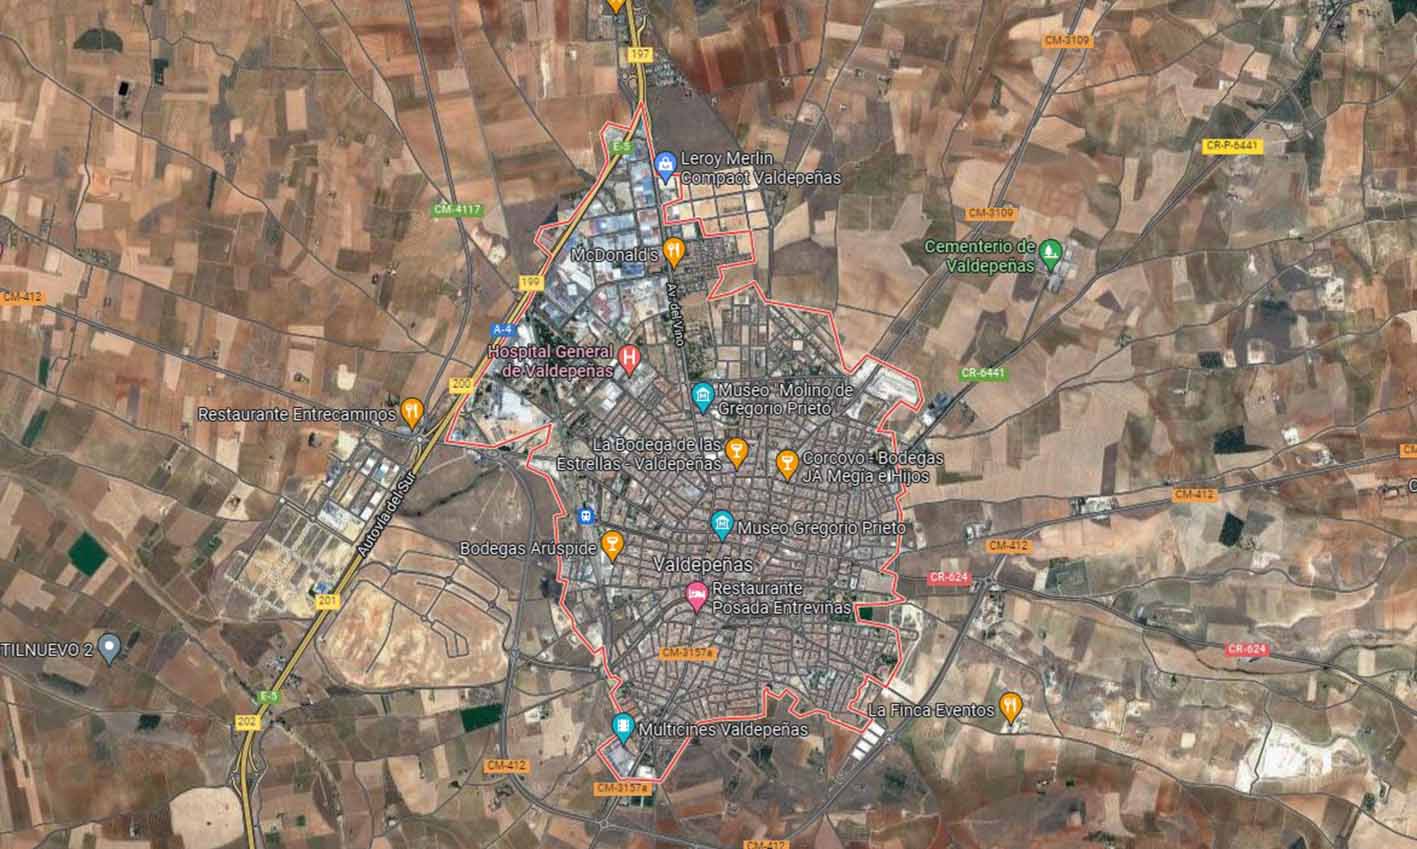 Atropello mortal en el término municipal de Valdepeñas. Imagen: Google Maps.